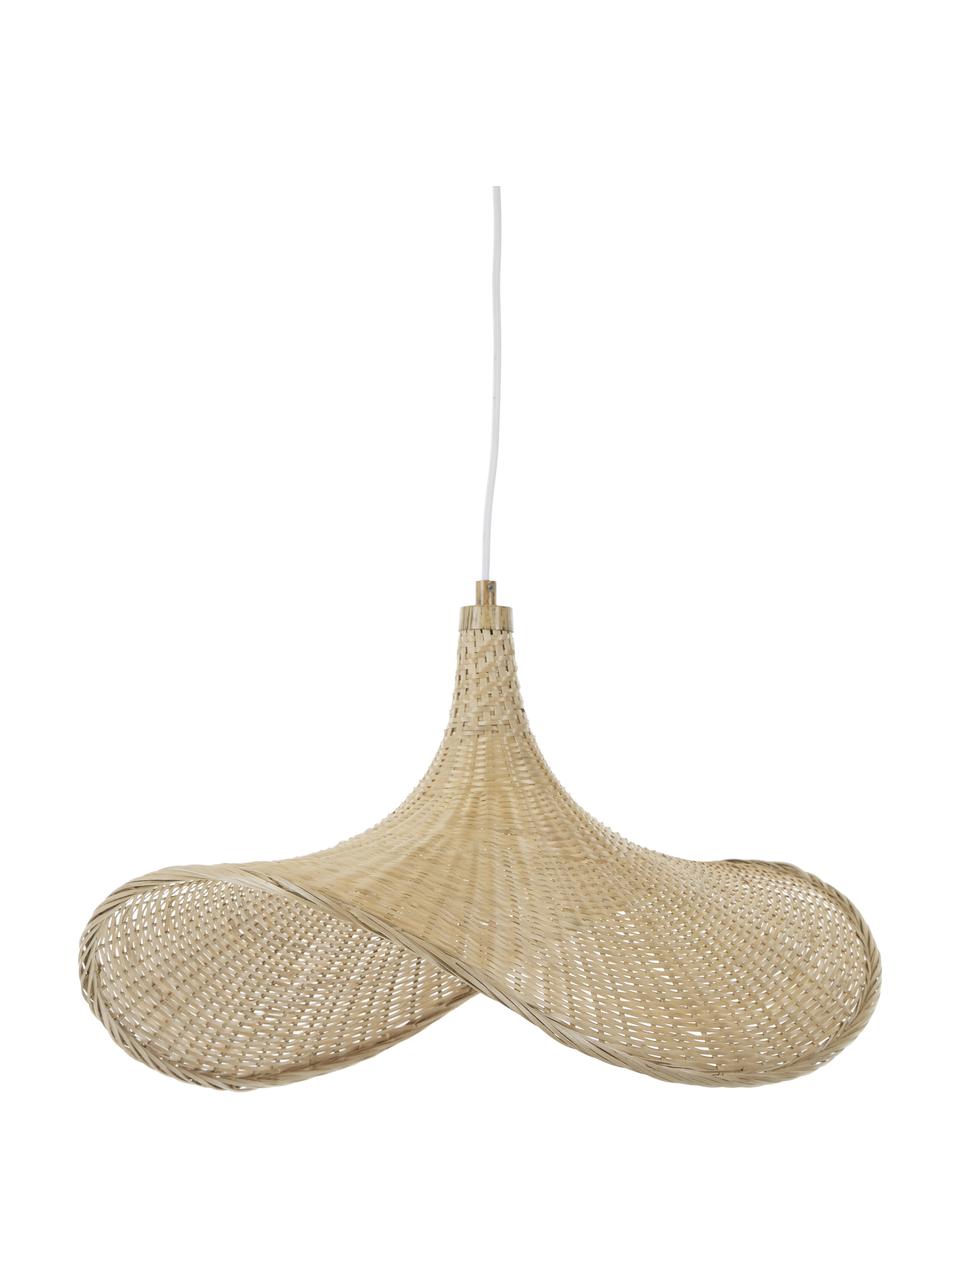 Lampada ovale a sospensione in legno di bambù Bahar, Paralume: bambù, Baldacchino: metallo, Bambù, Larg. 53 x Alt. 28 cm